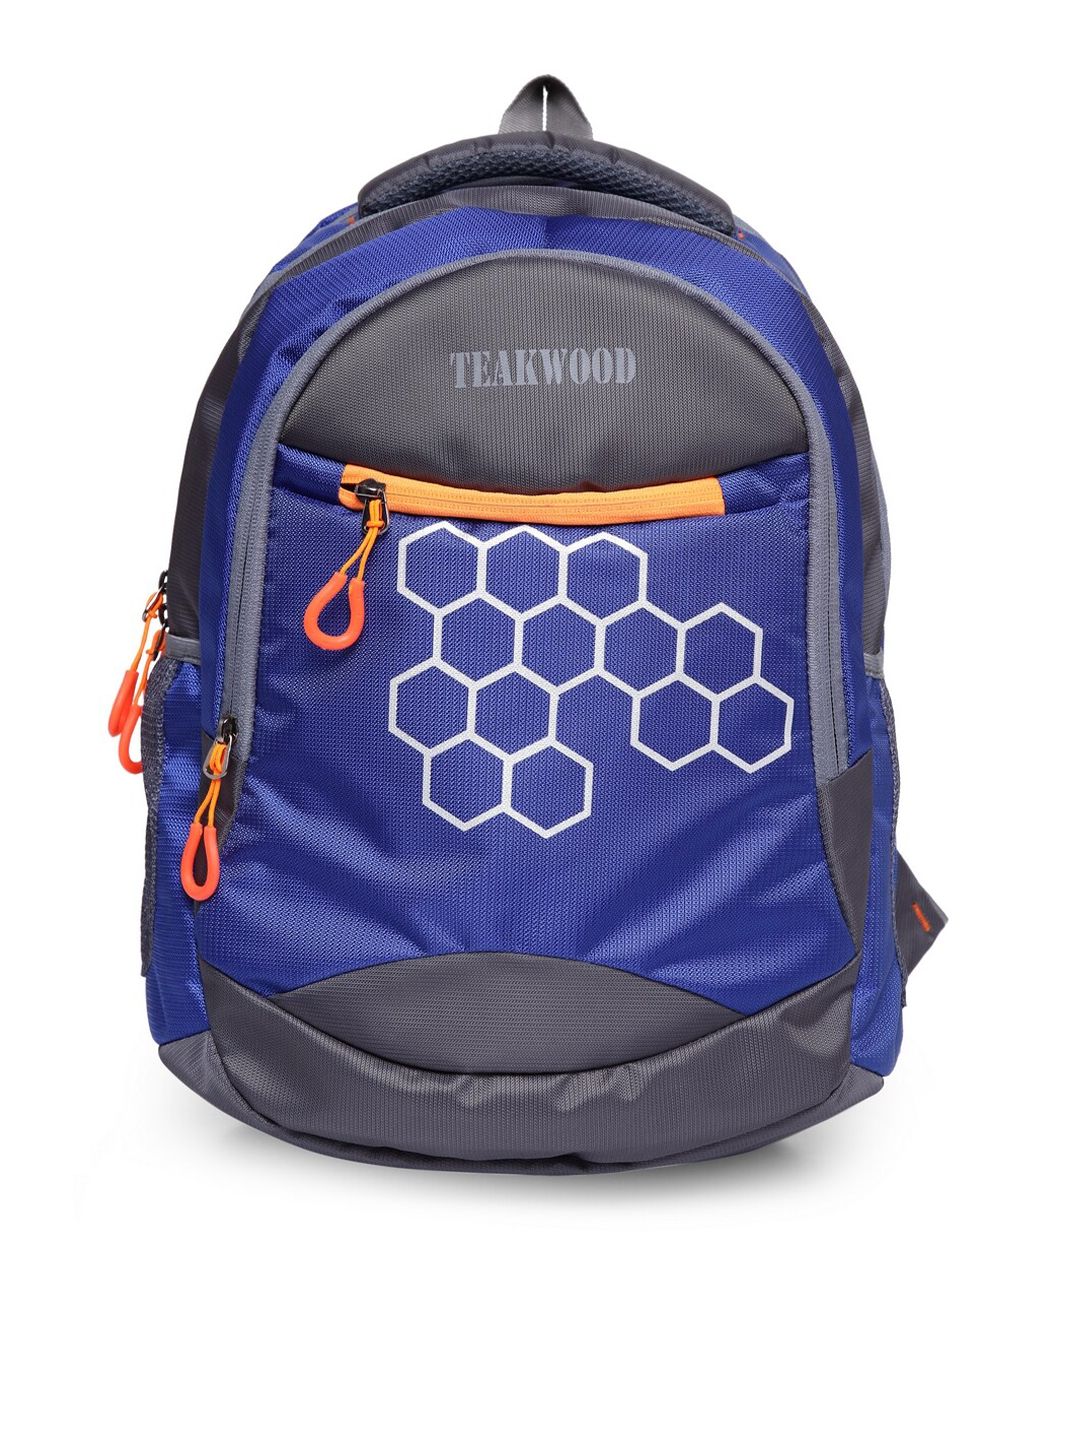 Teakwood Leathers Unisex Blue & Grey Brand Logo Backpack Price in India